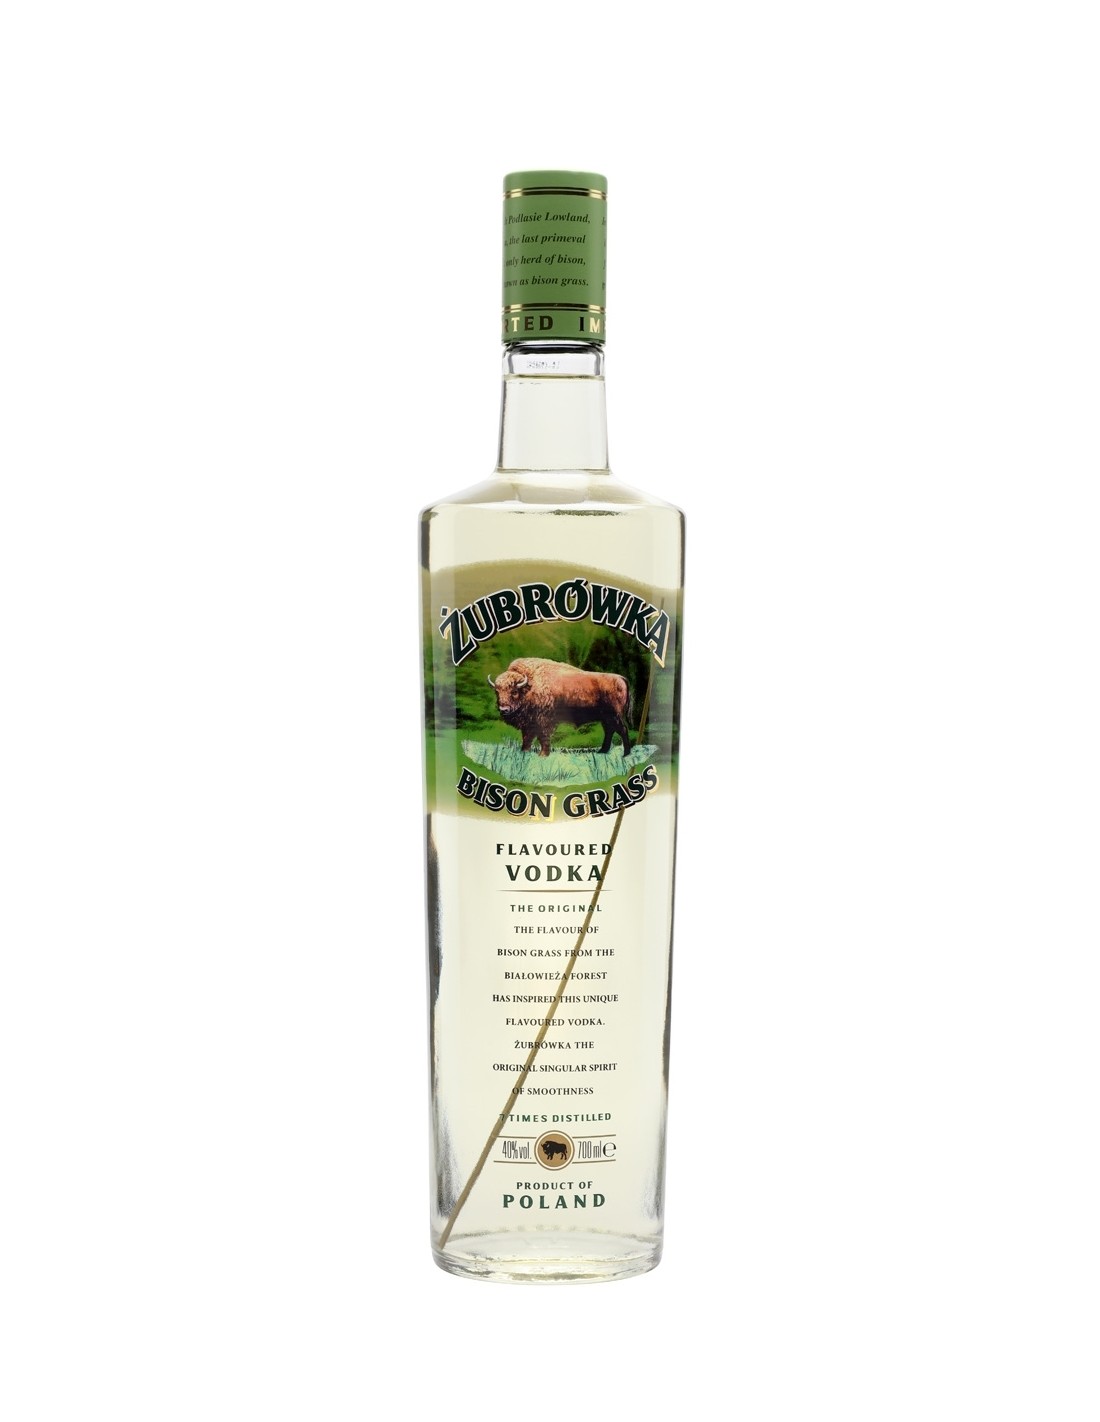 Vodca Zubrowka Bison Grass 0.7L, 40% alc., Polonia alcooldiscount.ro